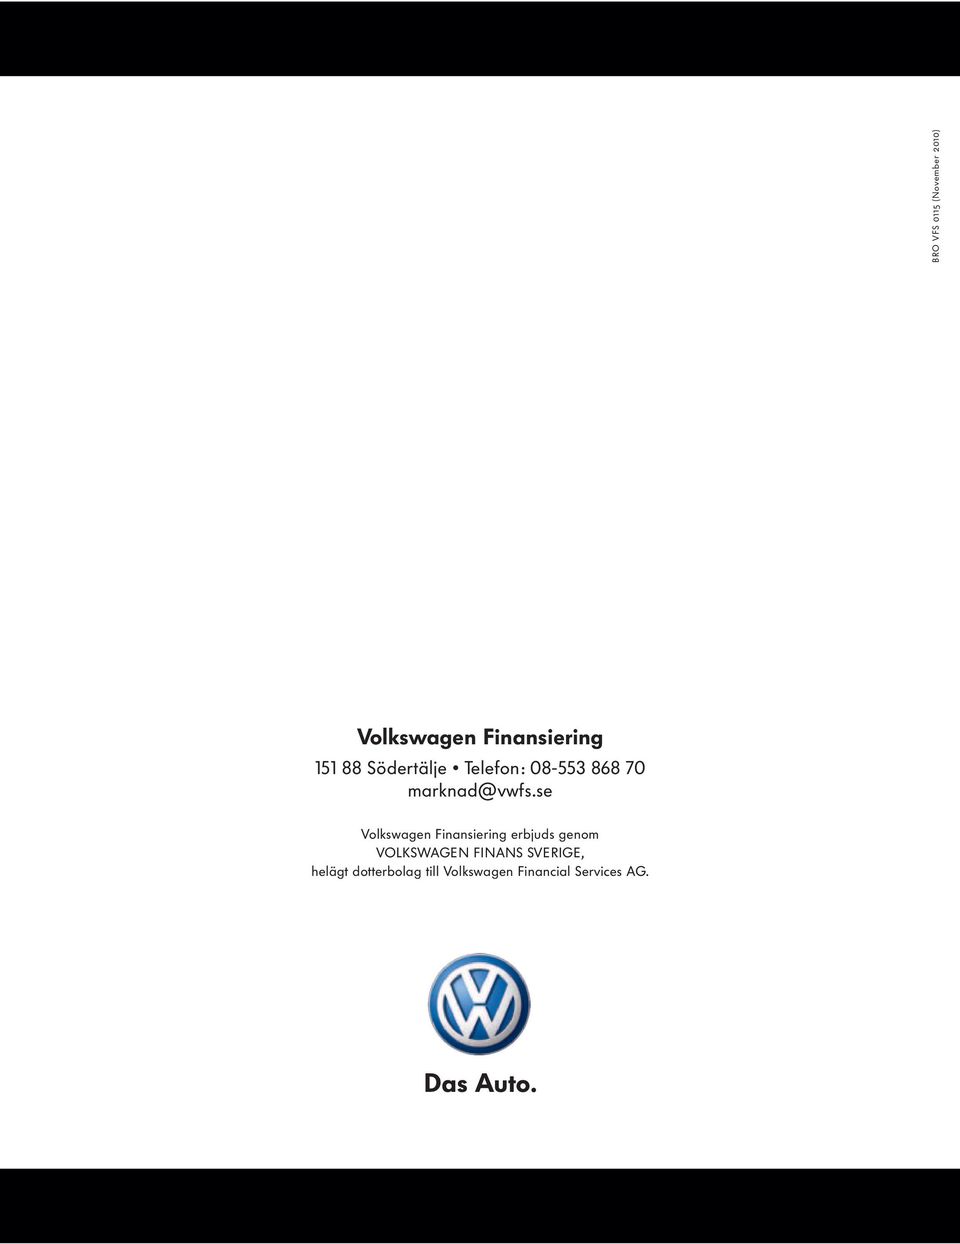 se Volkswagen Finansiering erbjuds genom VOLKSWAGEN